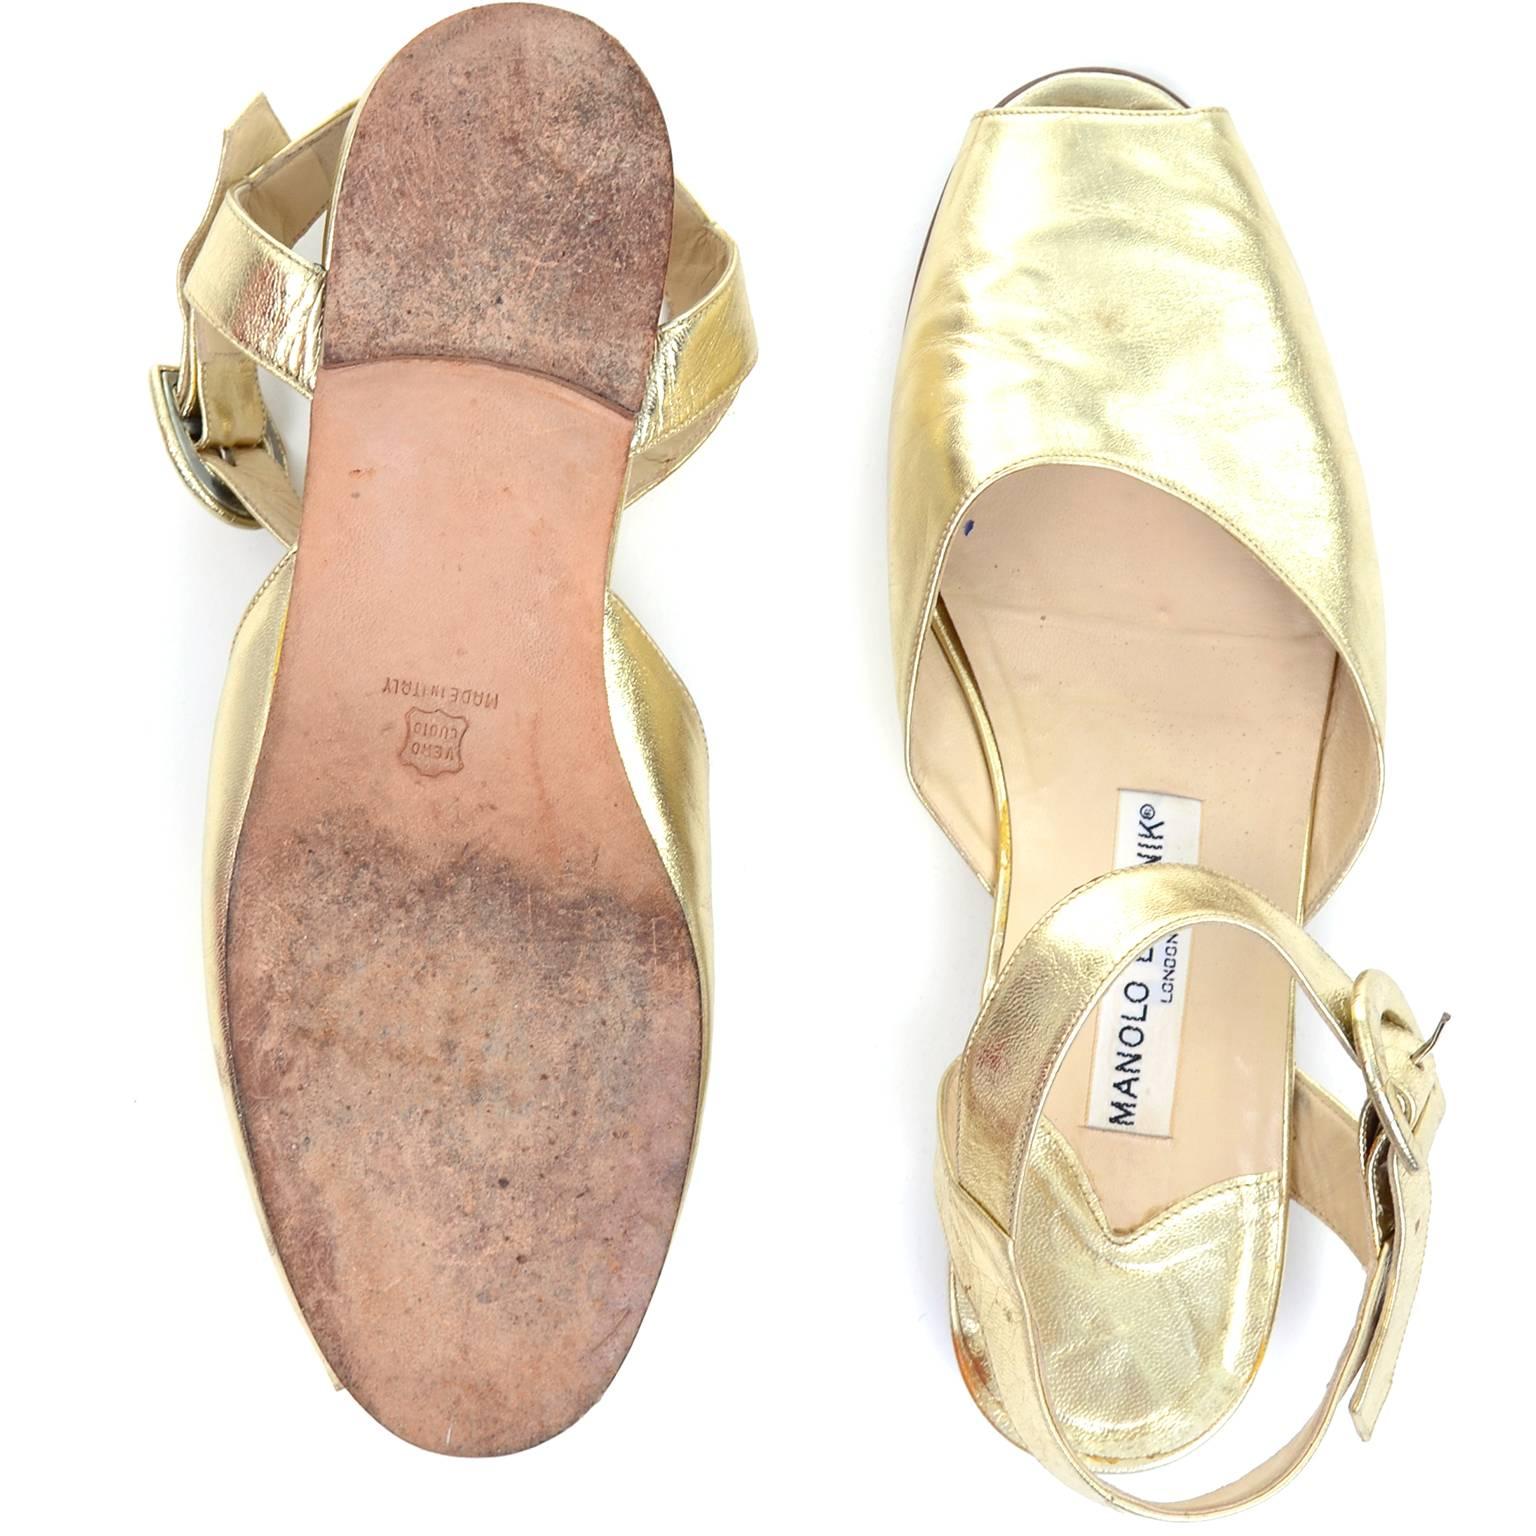 Women's Manolo Blahnik London Shoes Gold Peep Toe Flats Sandals Size 38